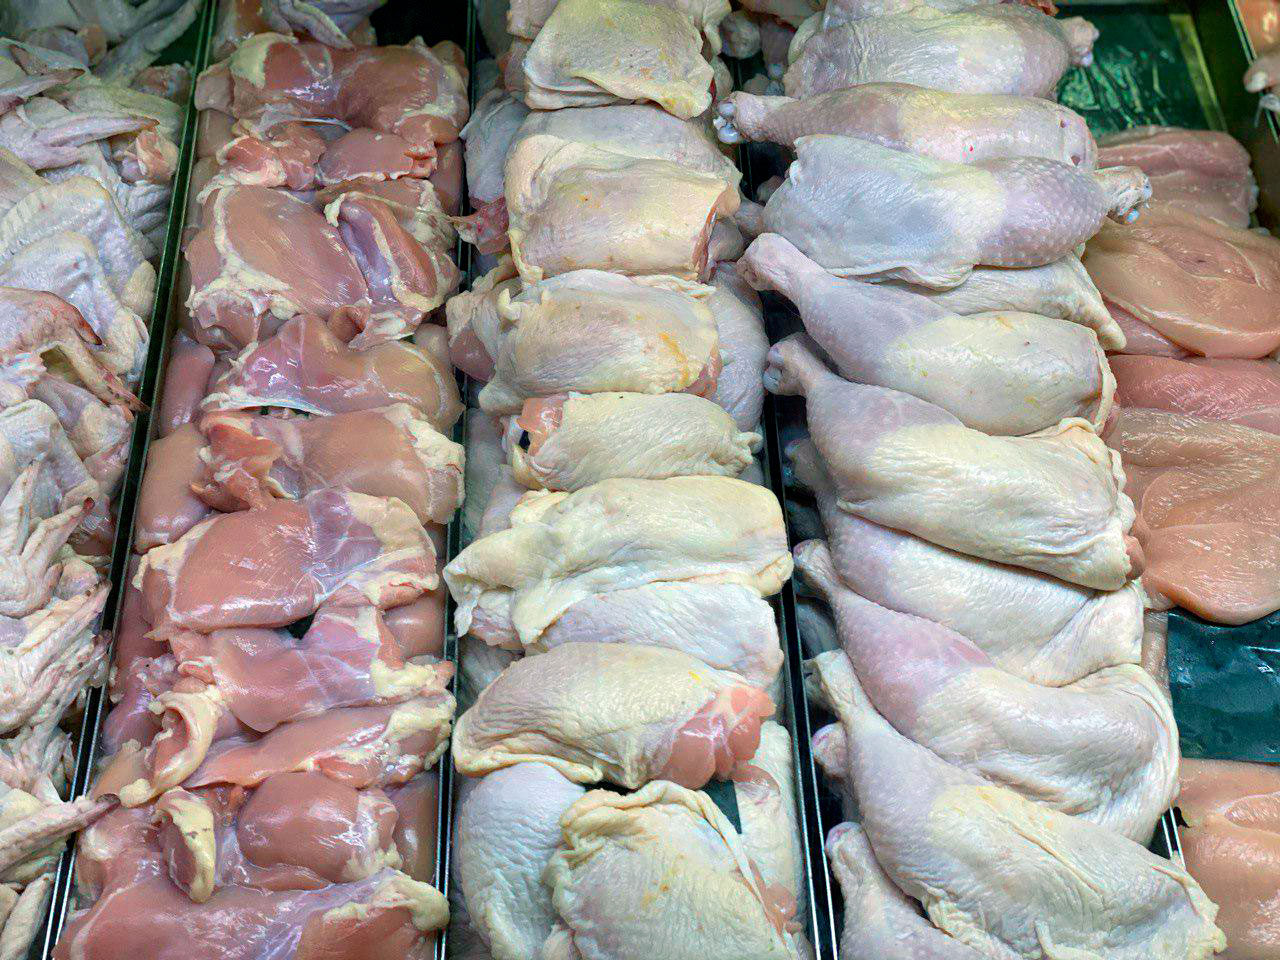 Grocery Stores Chicken Deals